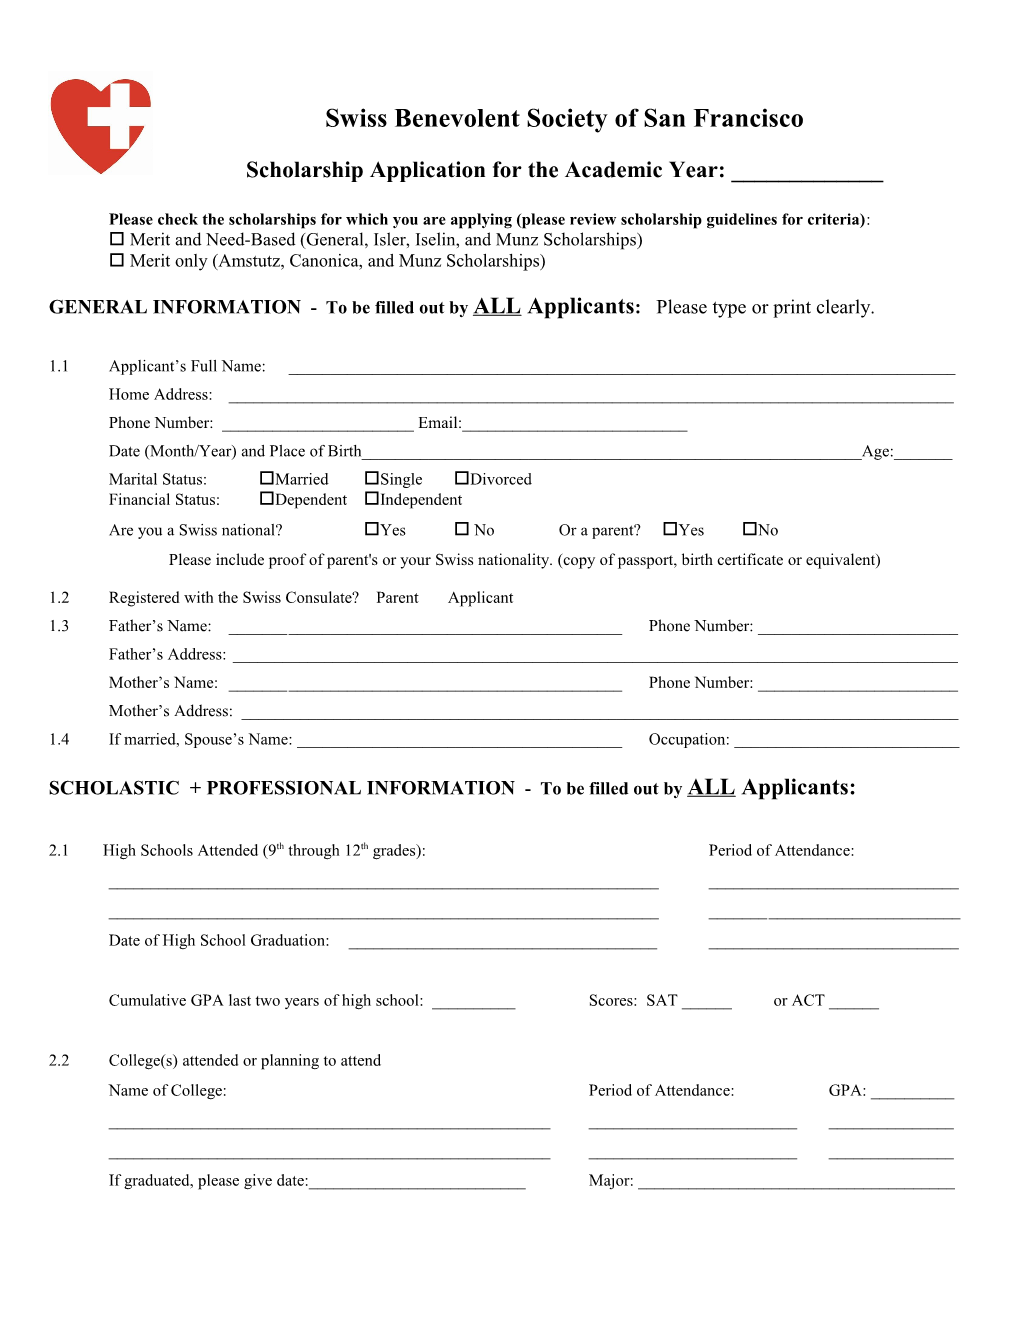 SBS Scholarship Application